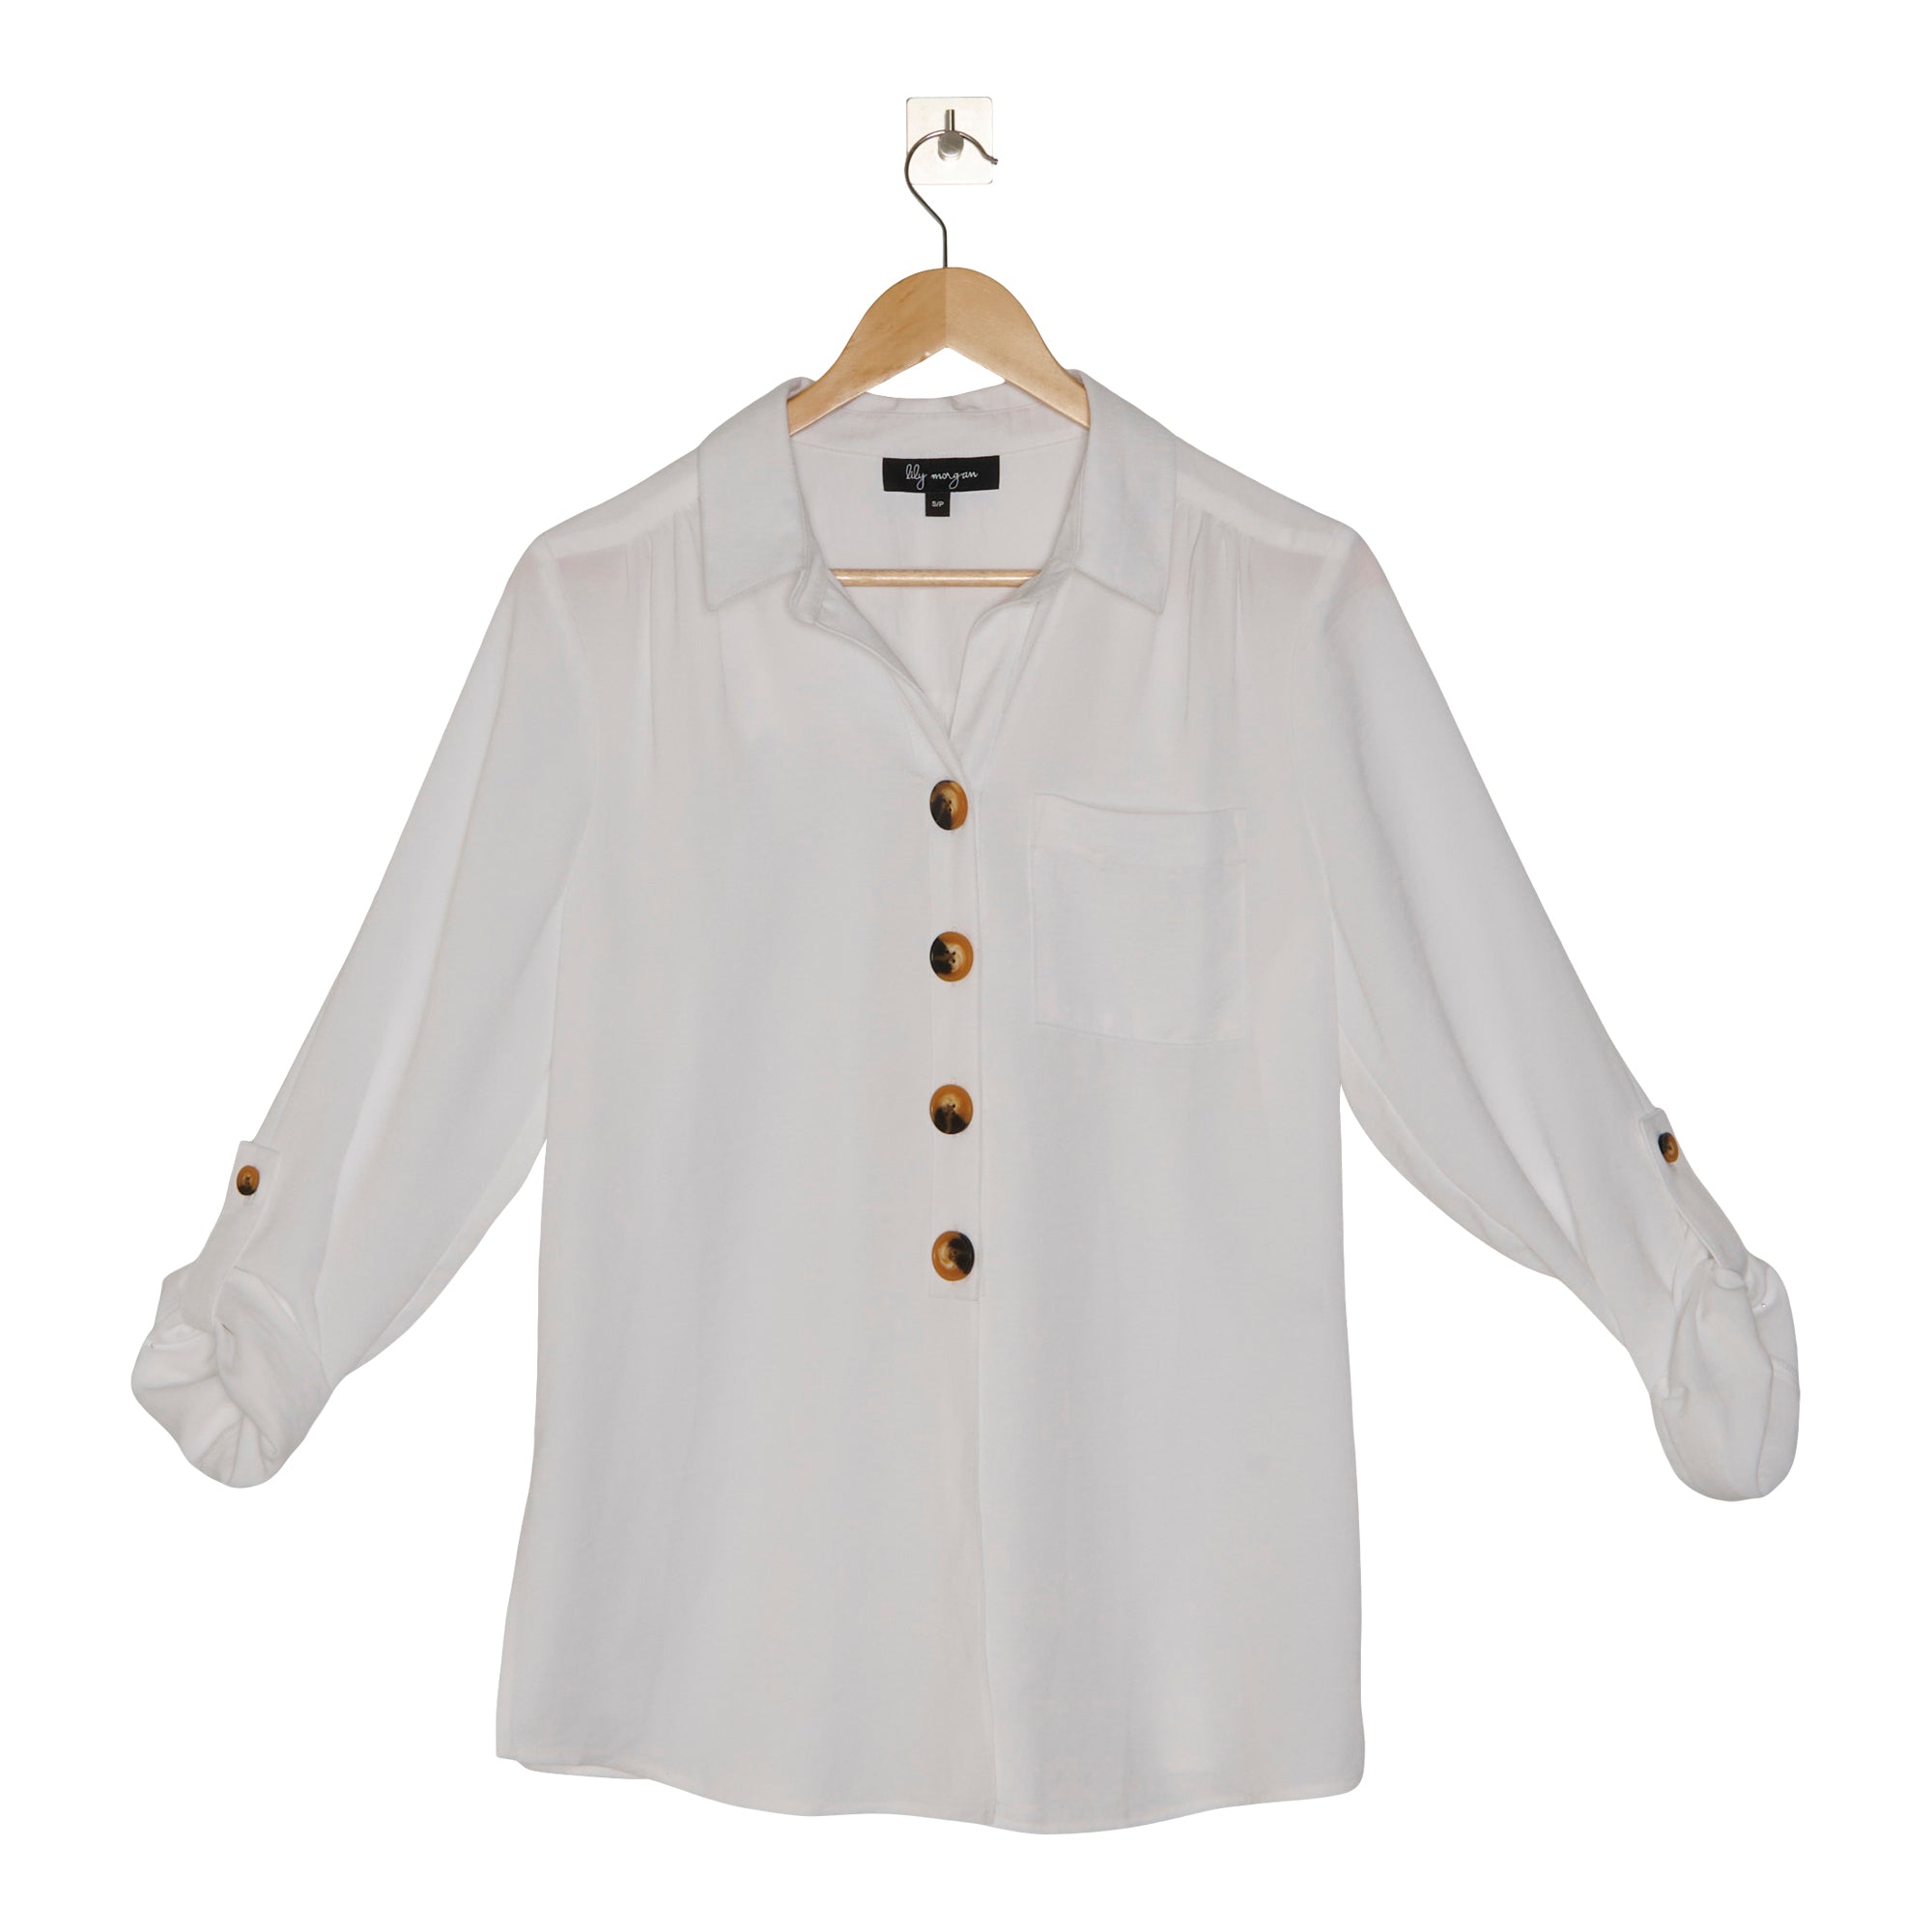 Blouse Shirt Top Morgan Crossing Woman Black Red White Plus Size 18 3/4  Sleeve